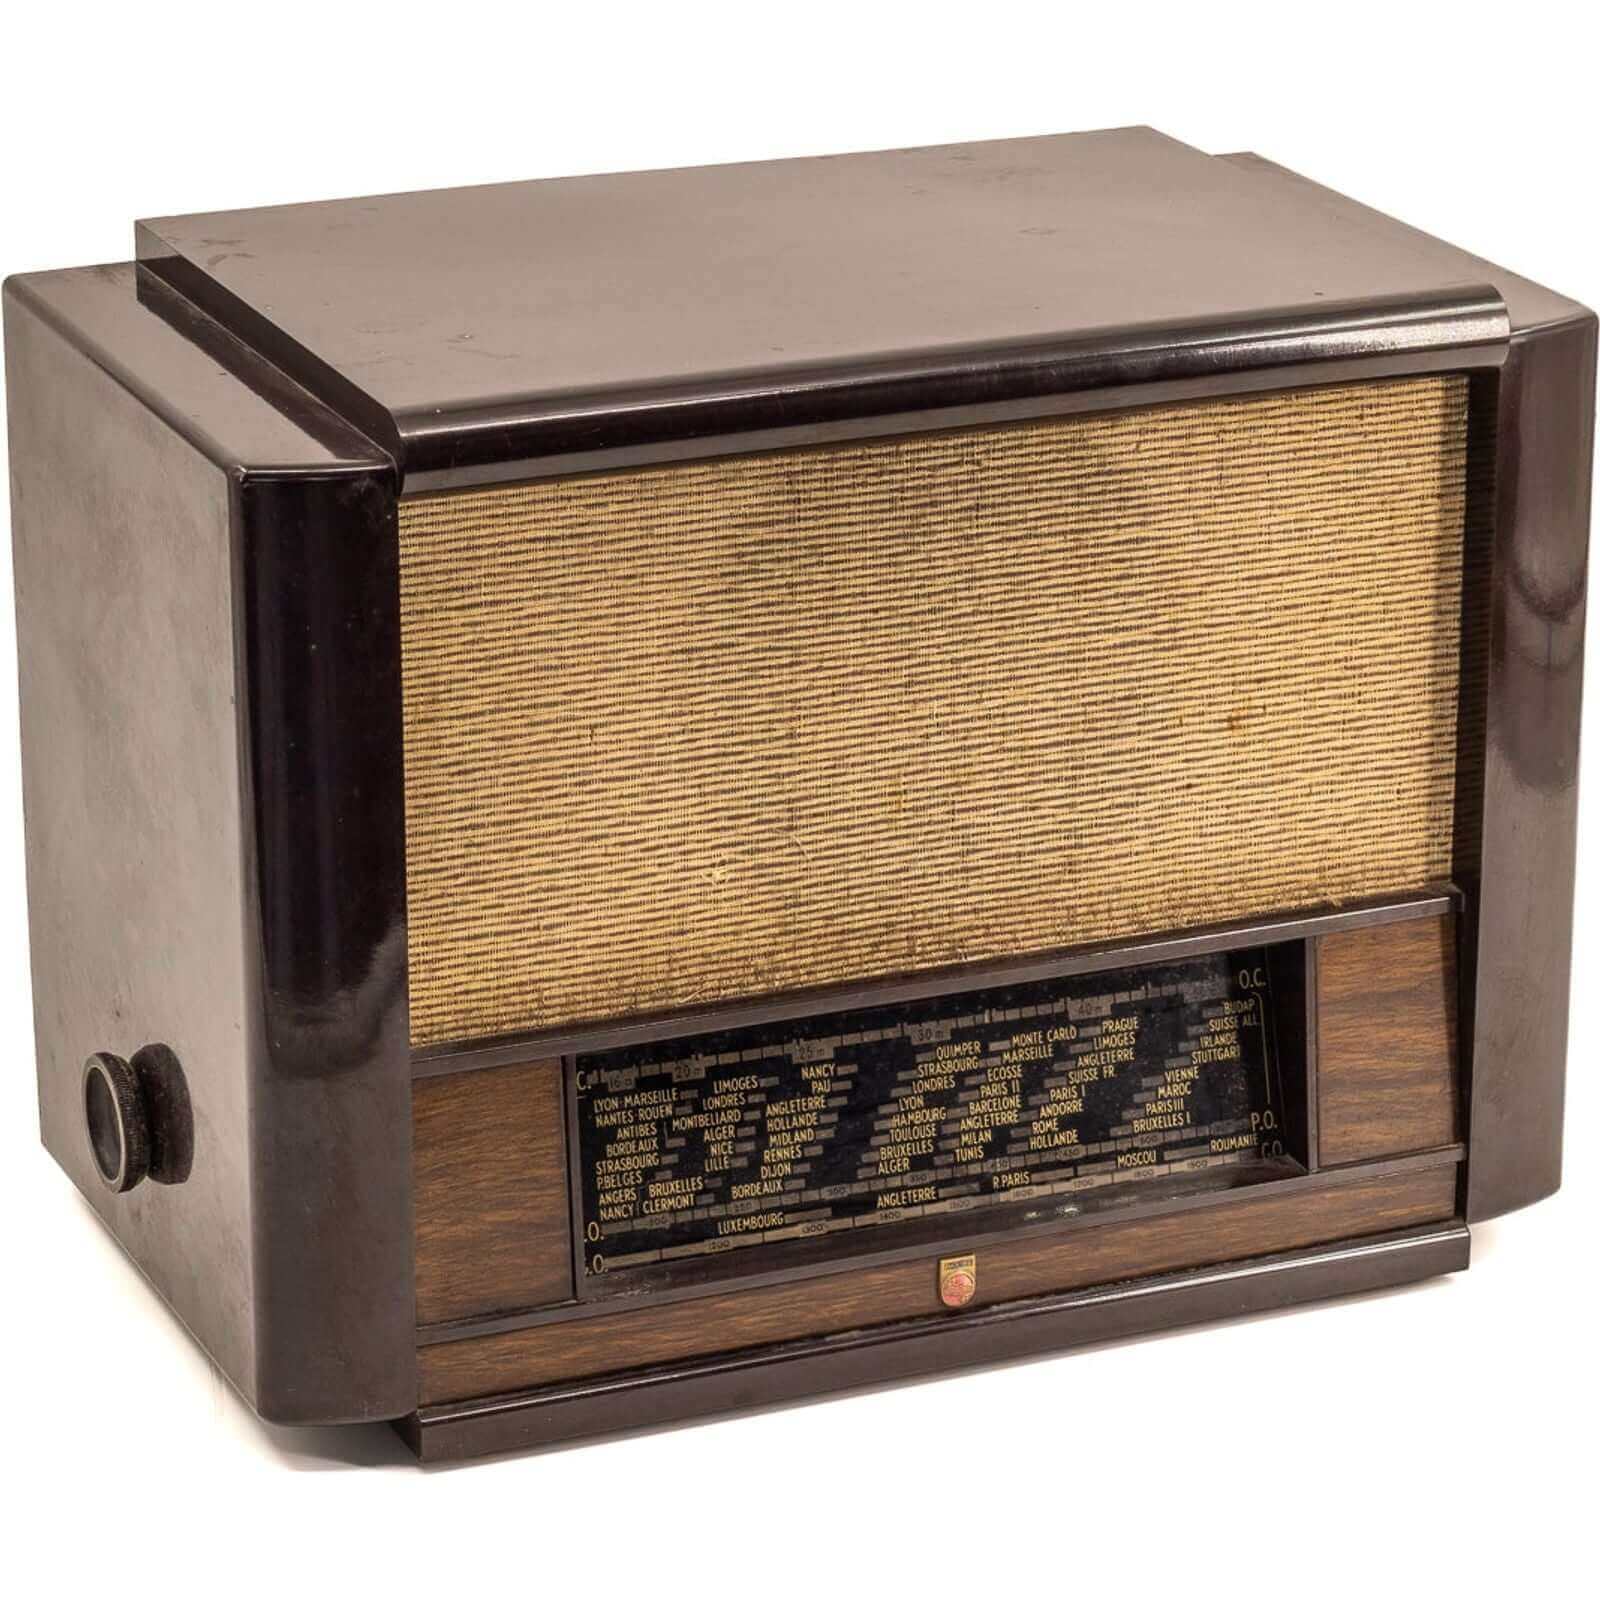 Radio Bluetooth Philips Vintage 50’S enceinte connectée bluetooth haut de gamme prodige radio vintage design